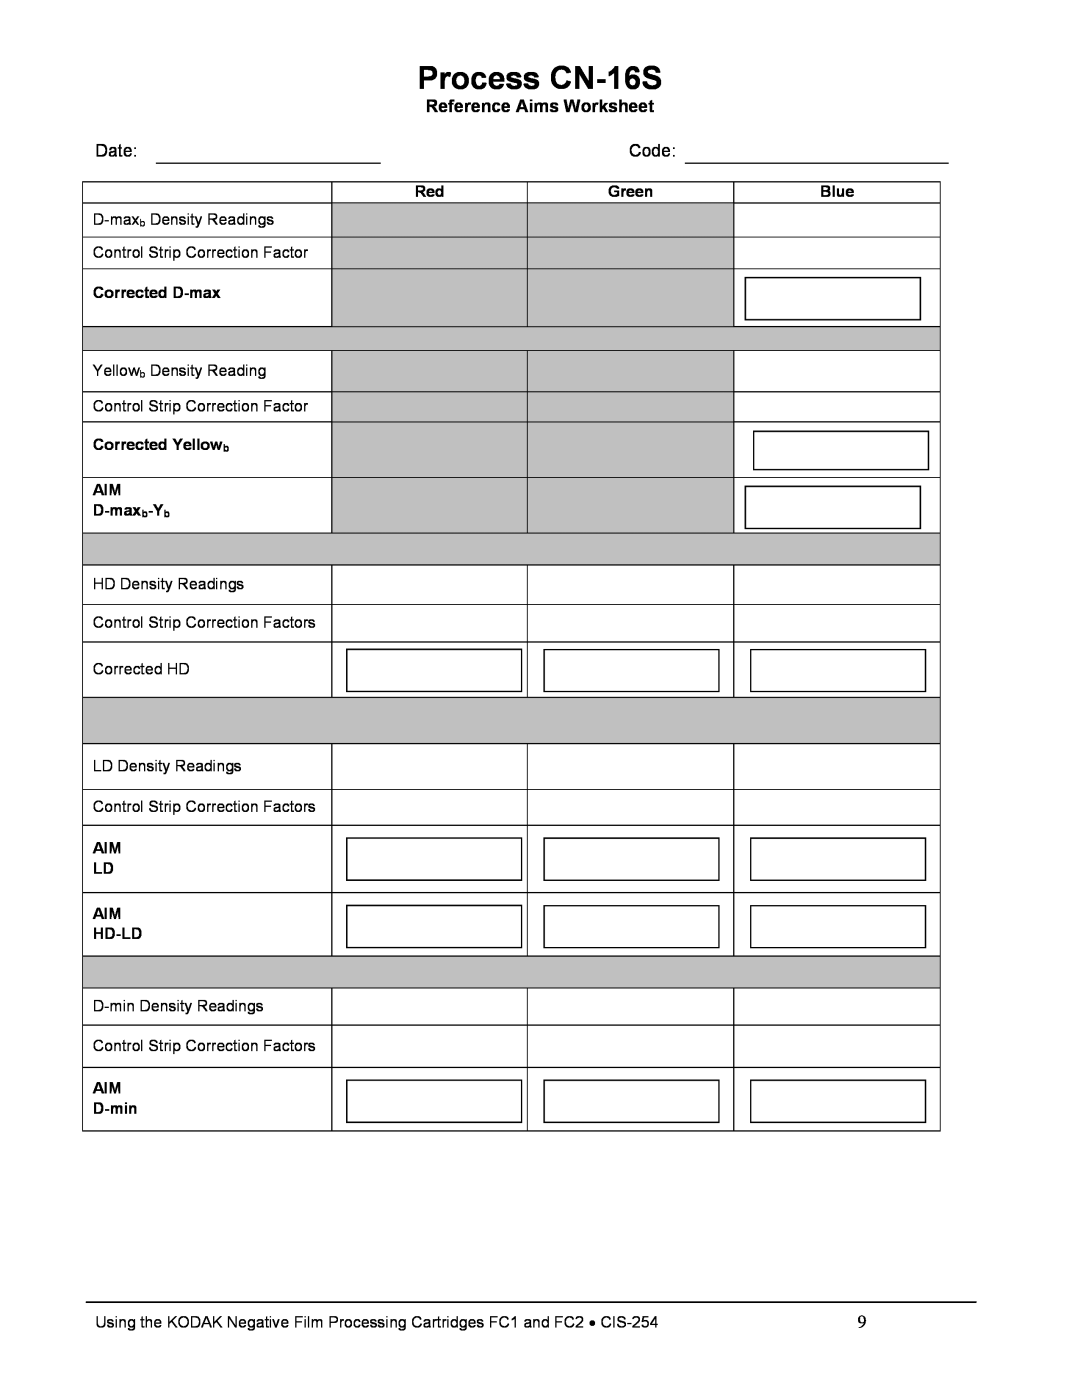 Kodak FC2, FC1 manual Reference Aims Worksheet, Date, Code, Process CN-16S 